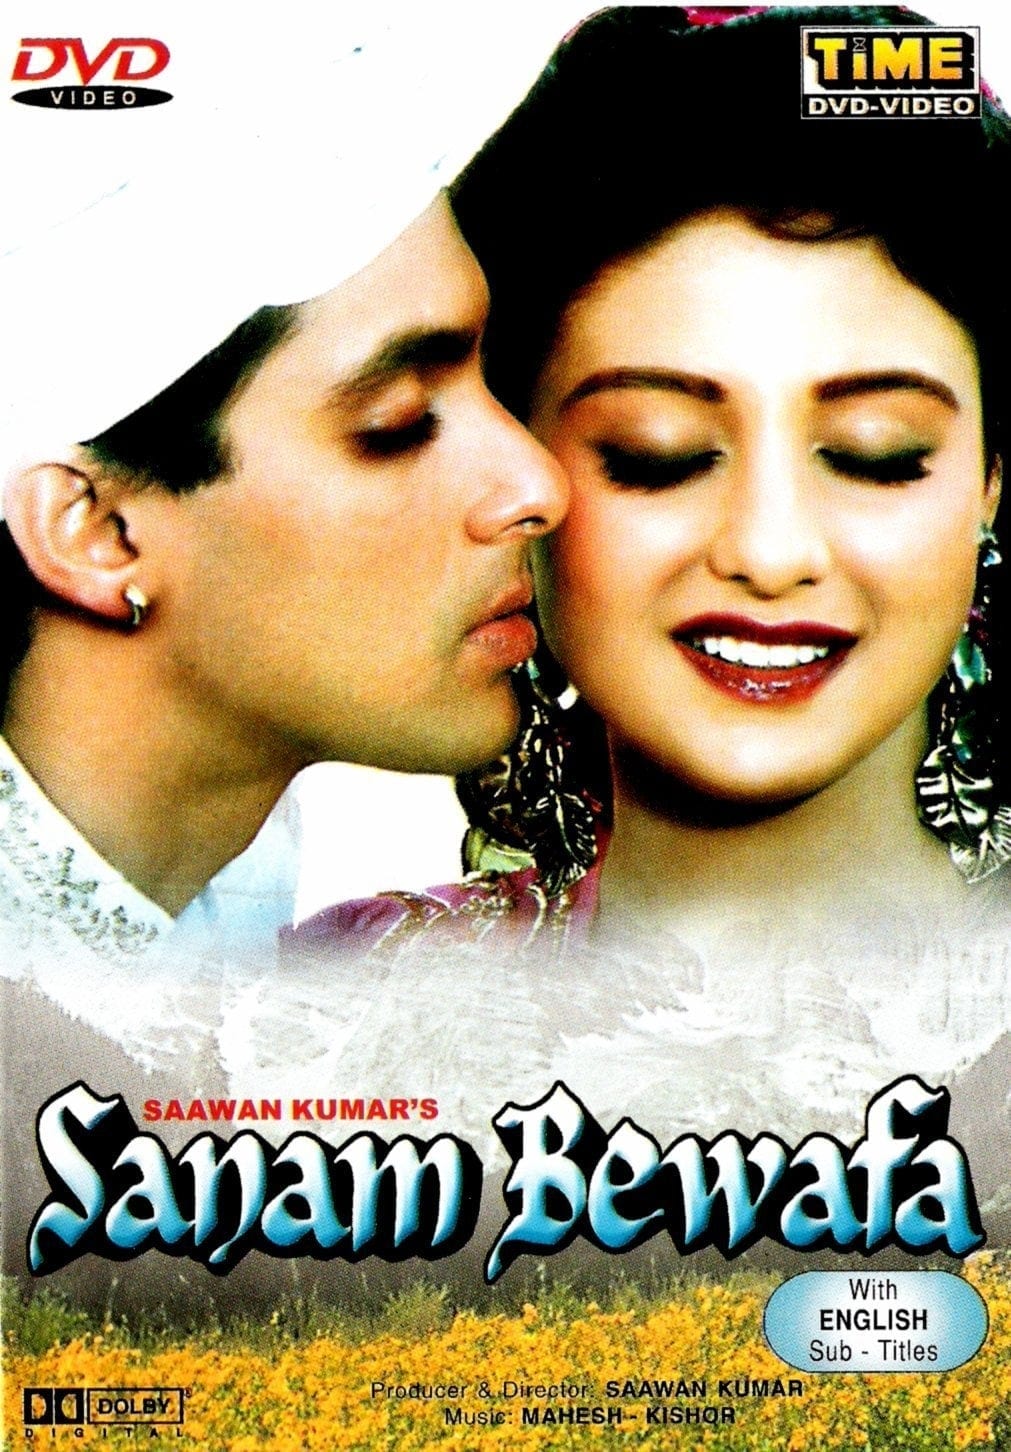 Poster for the movie "Sanam Bewafa"